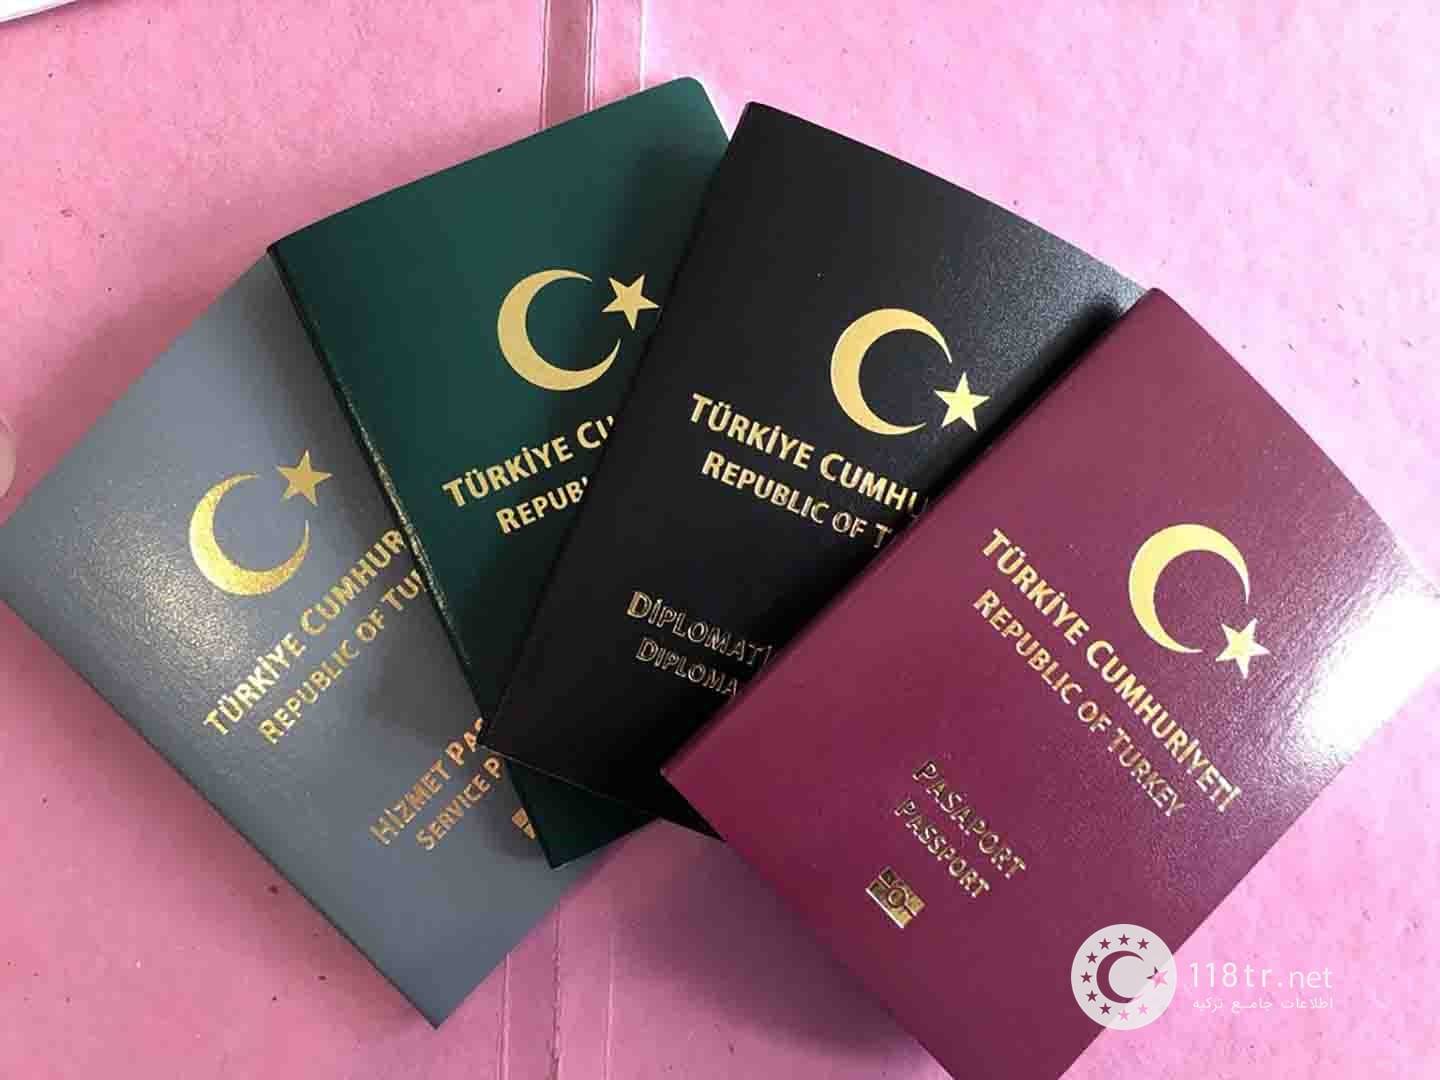 travel to turkey with iranian passport